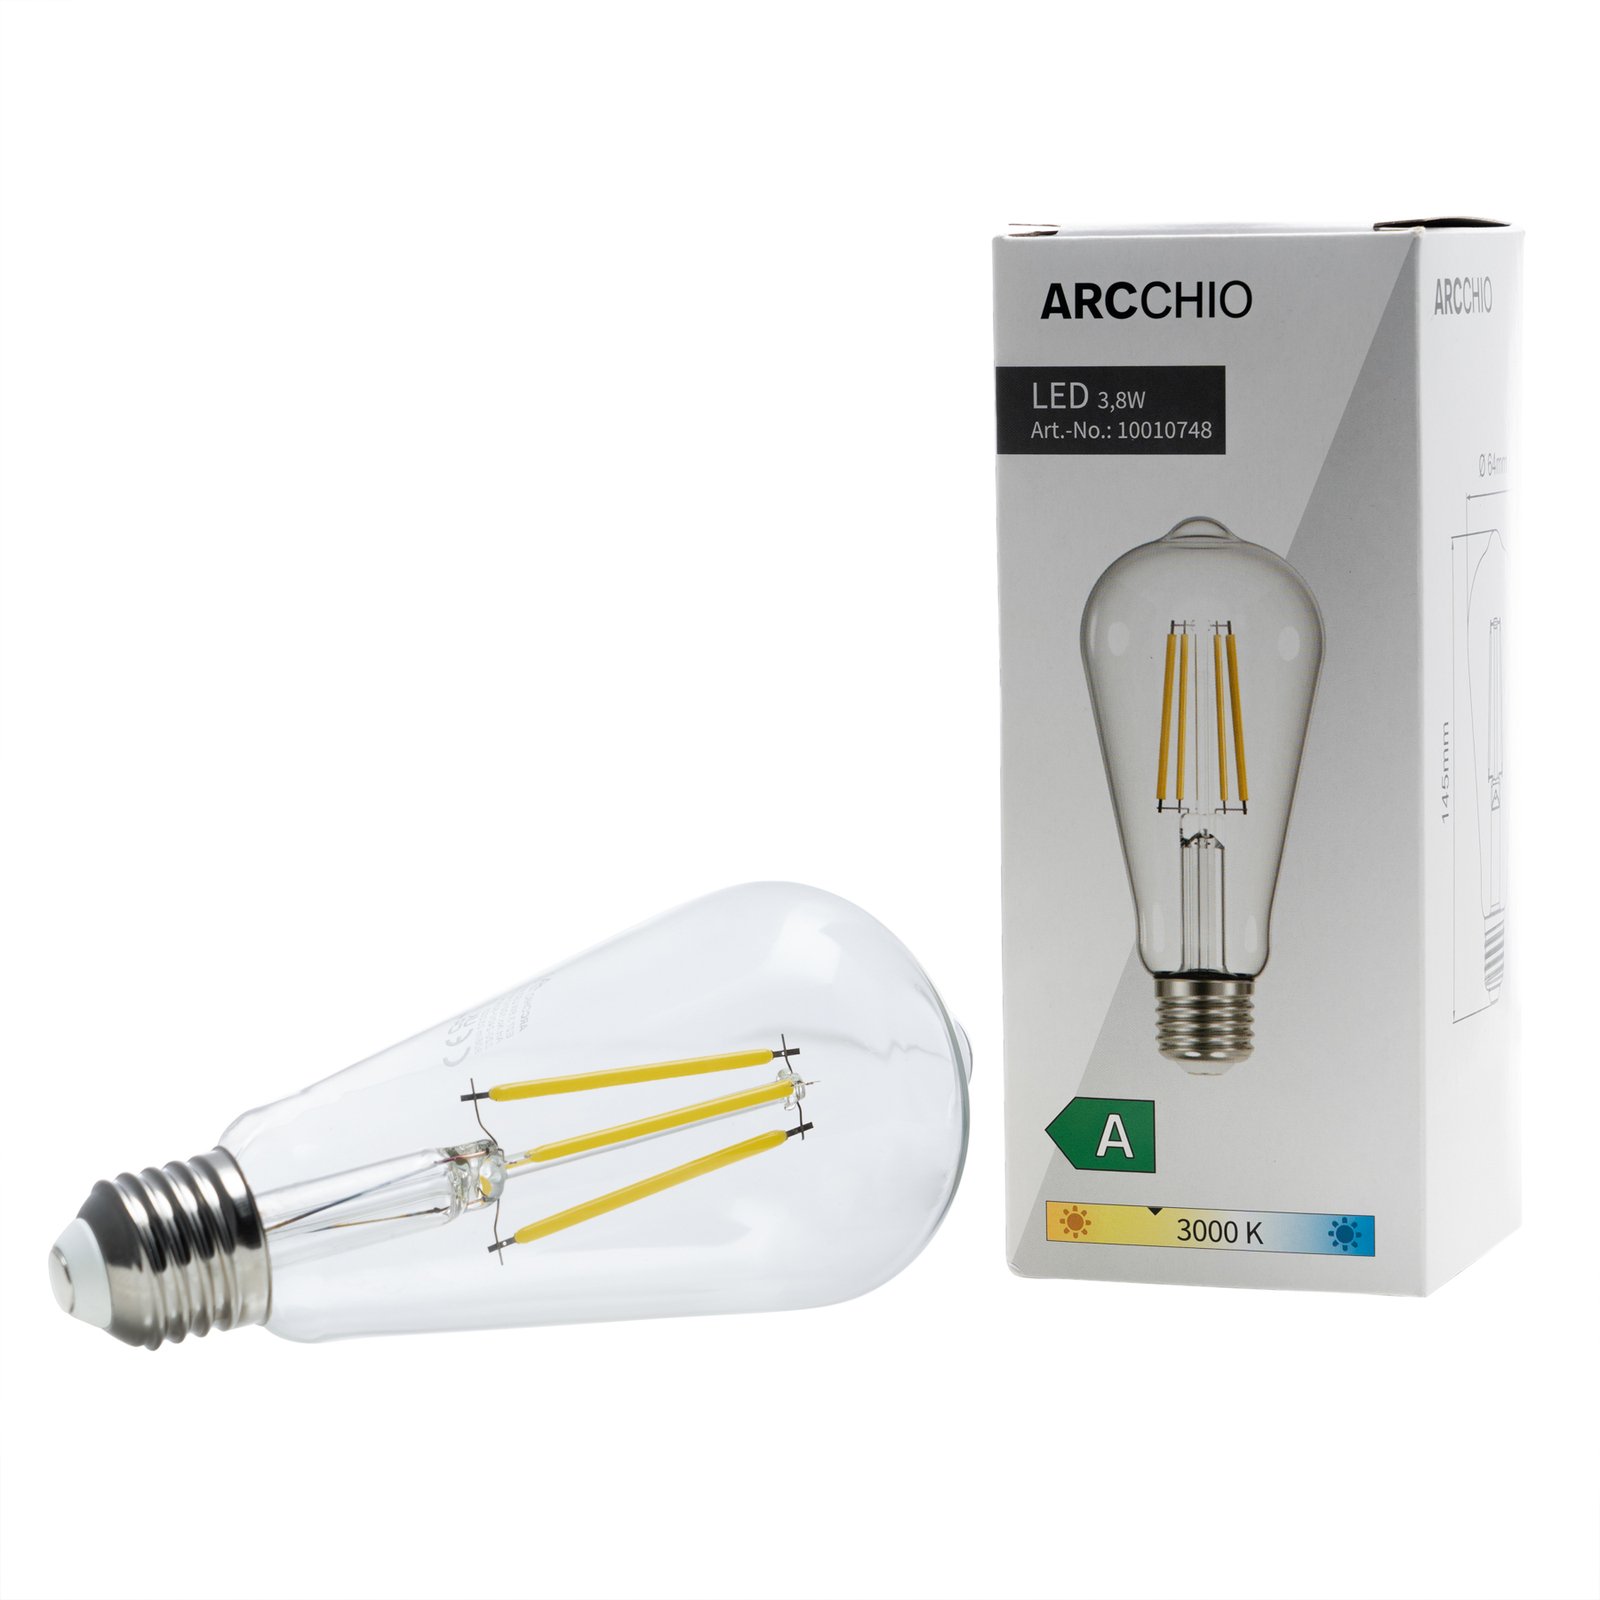 Arcchio LED-rustikkpære E27 3,8W 3000 K 806 lm